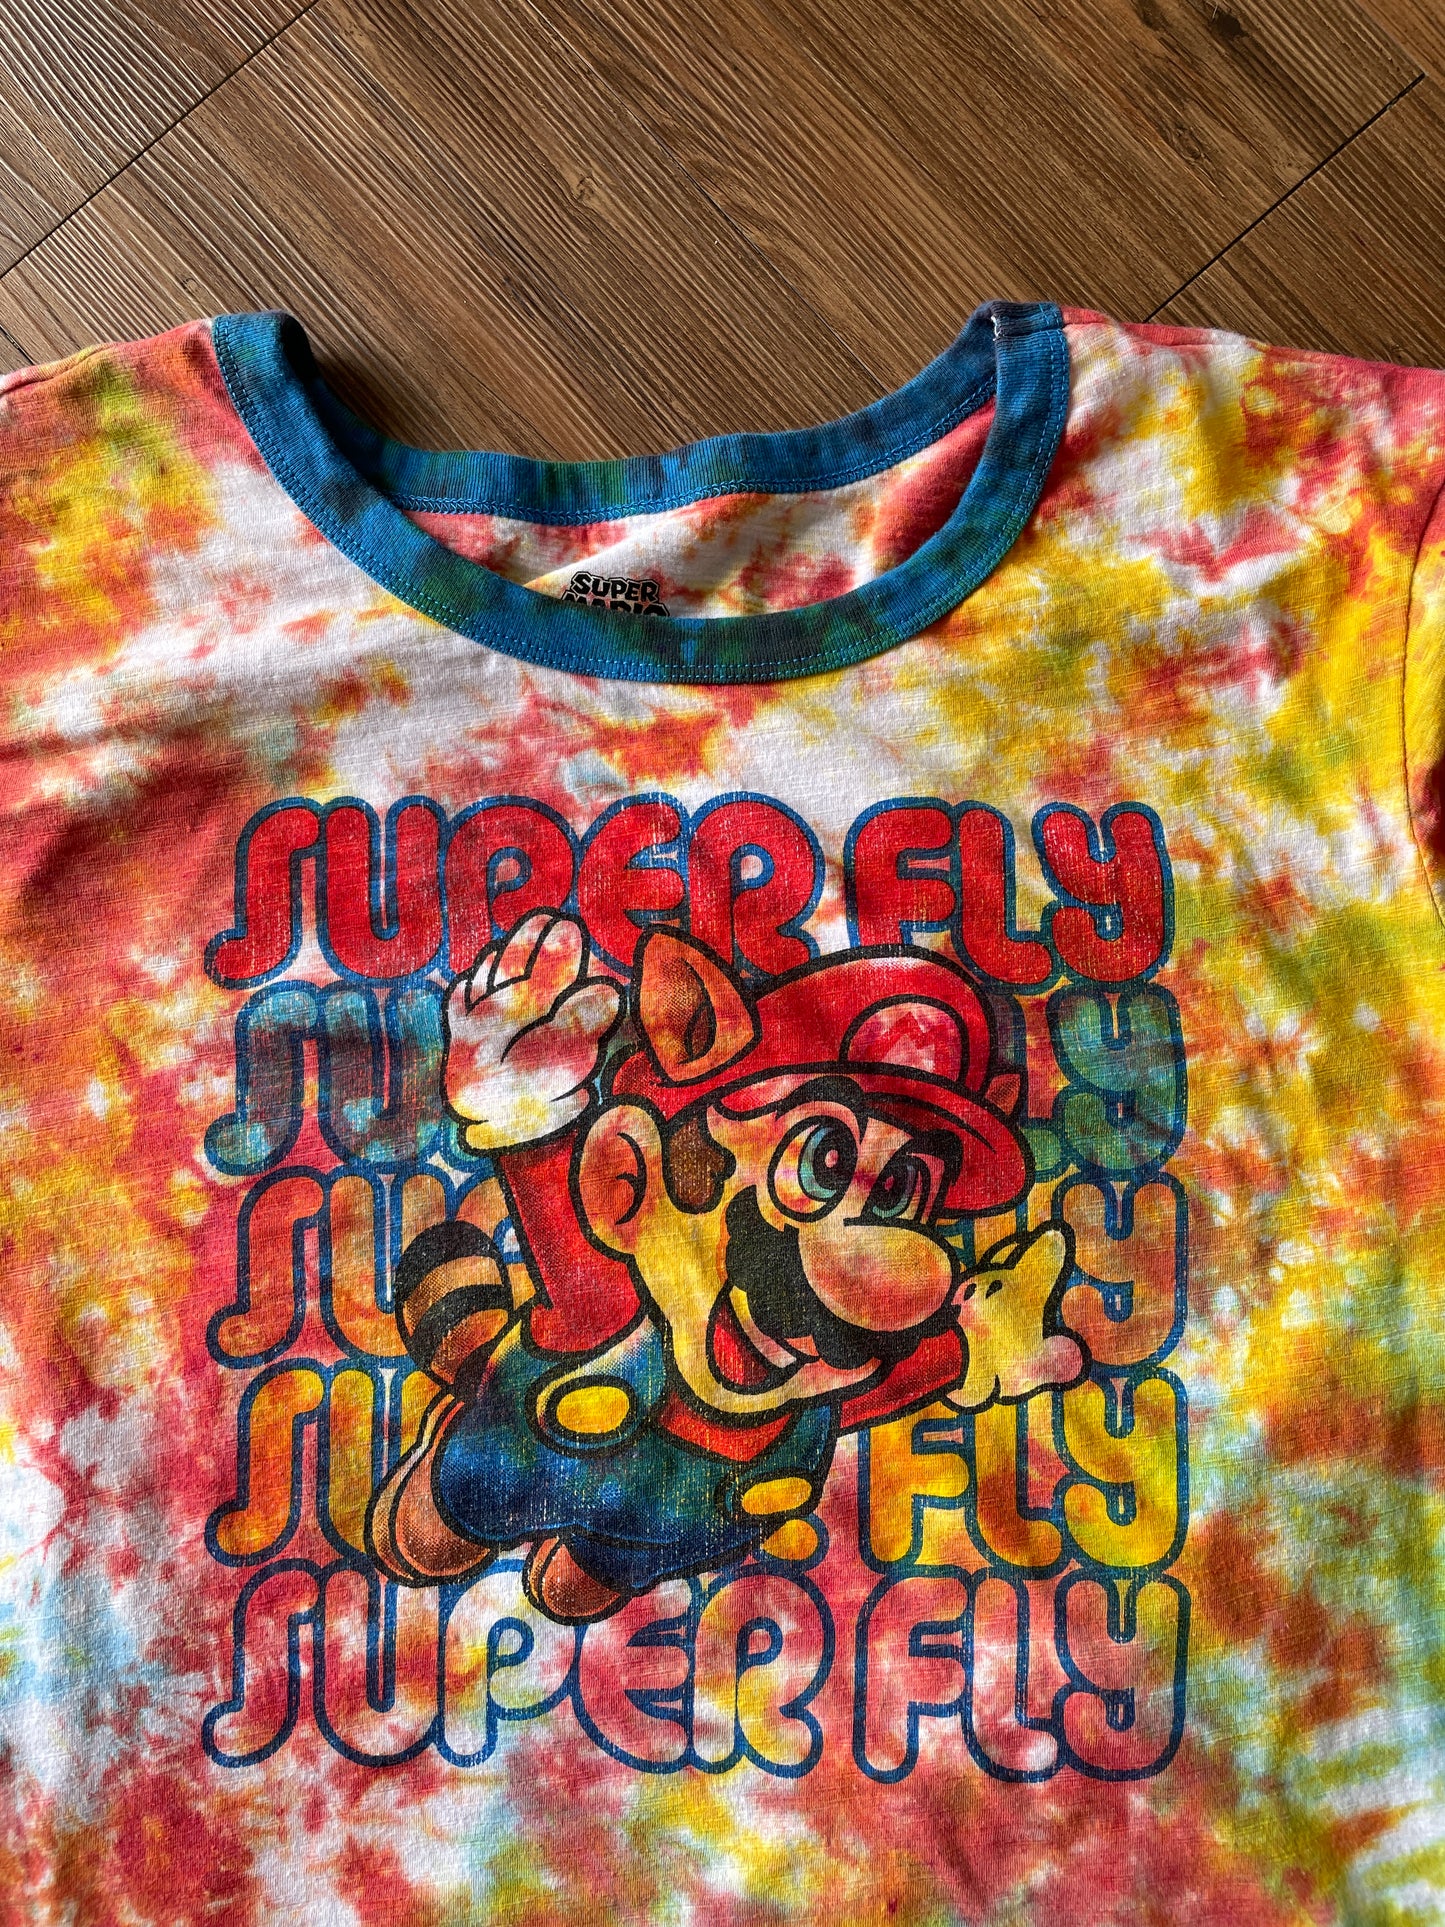 2XL Men’s Super Mario Super Fly Tie Dye T-Shirt | Rainbow Crumpled Tie Dye Short Sleeve